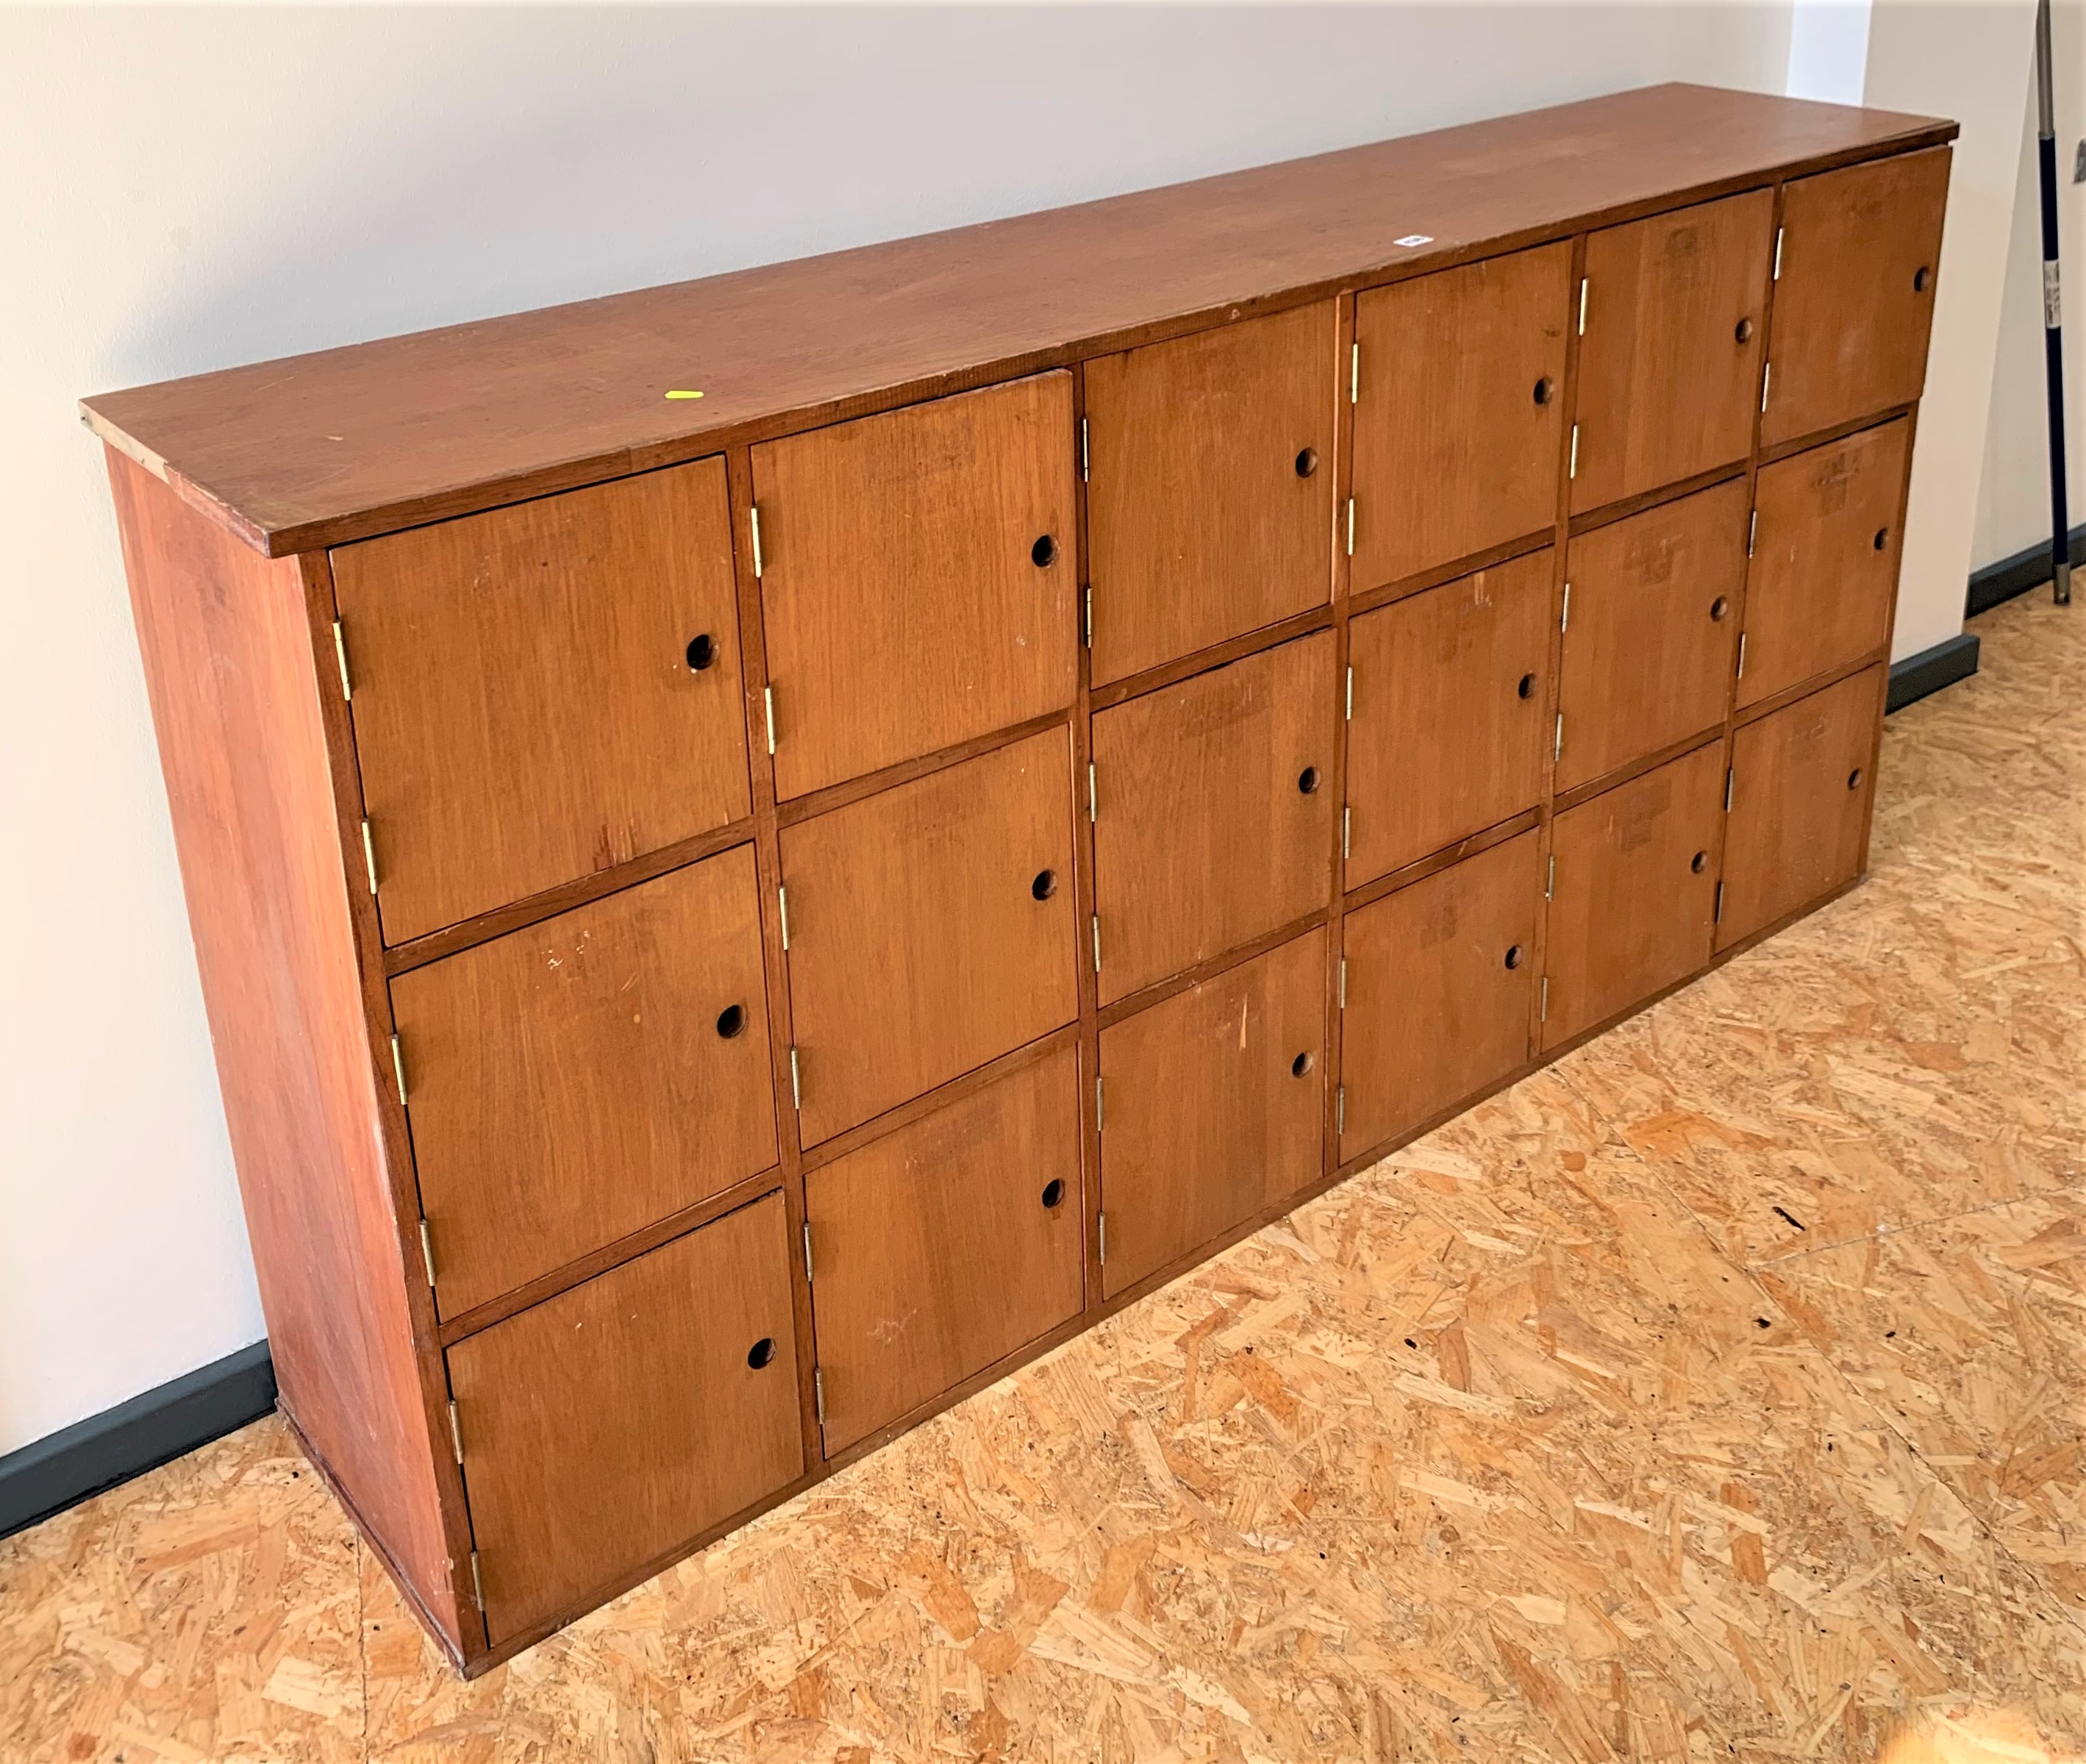 Wooden locker cabinet - Image 2 of 3